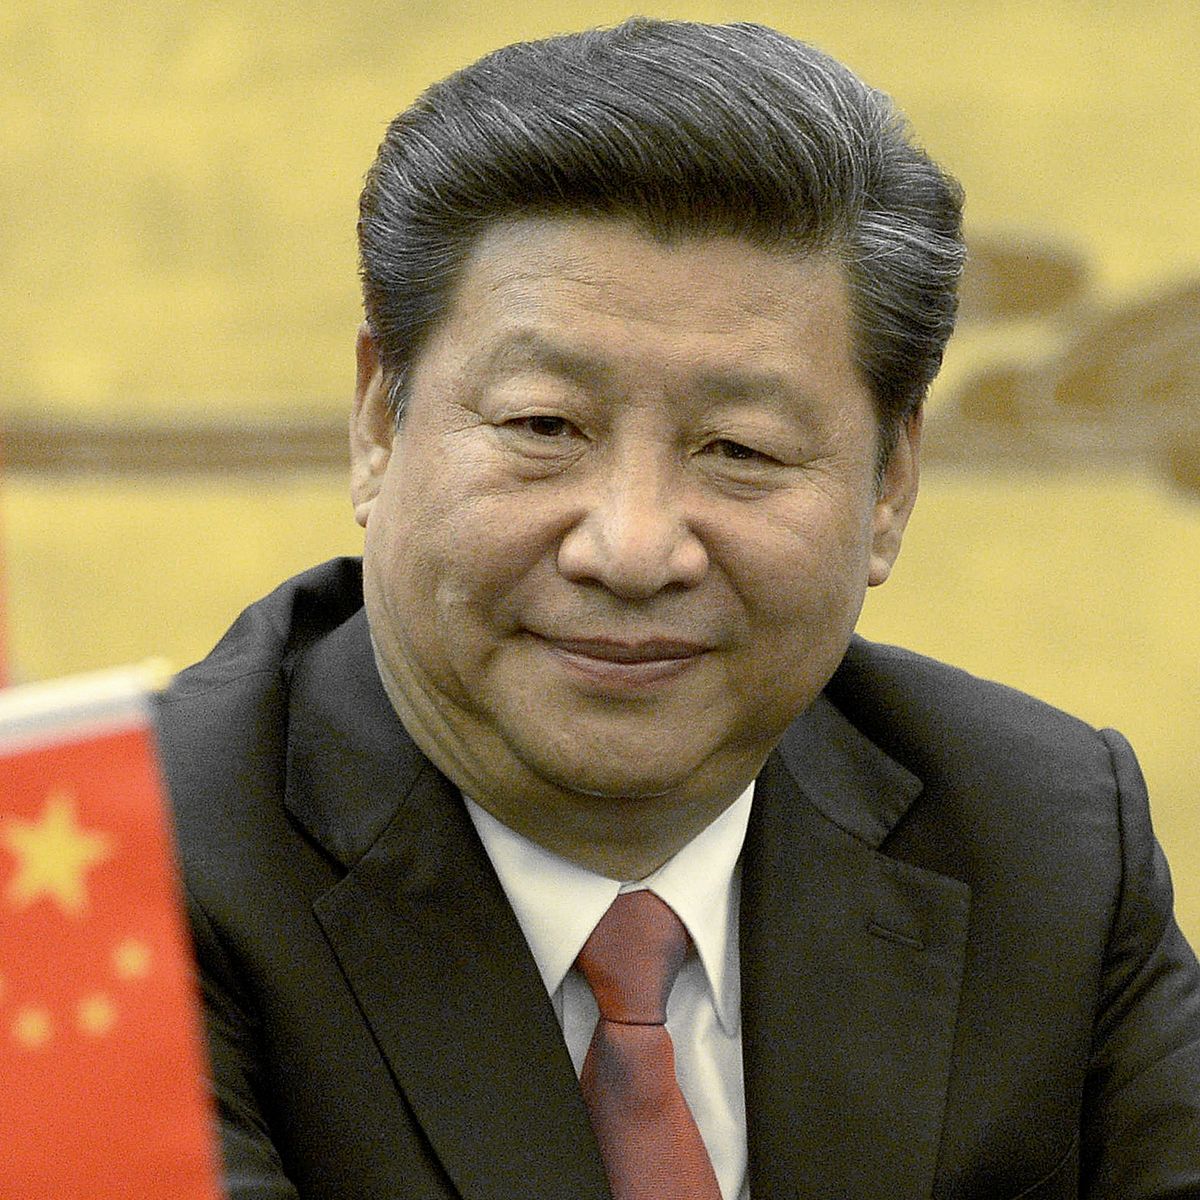 Xi Jinping photo via Getty Images